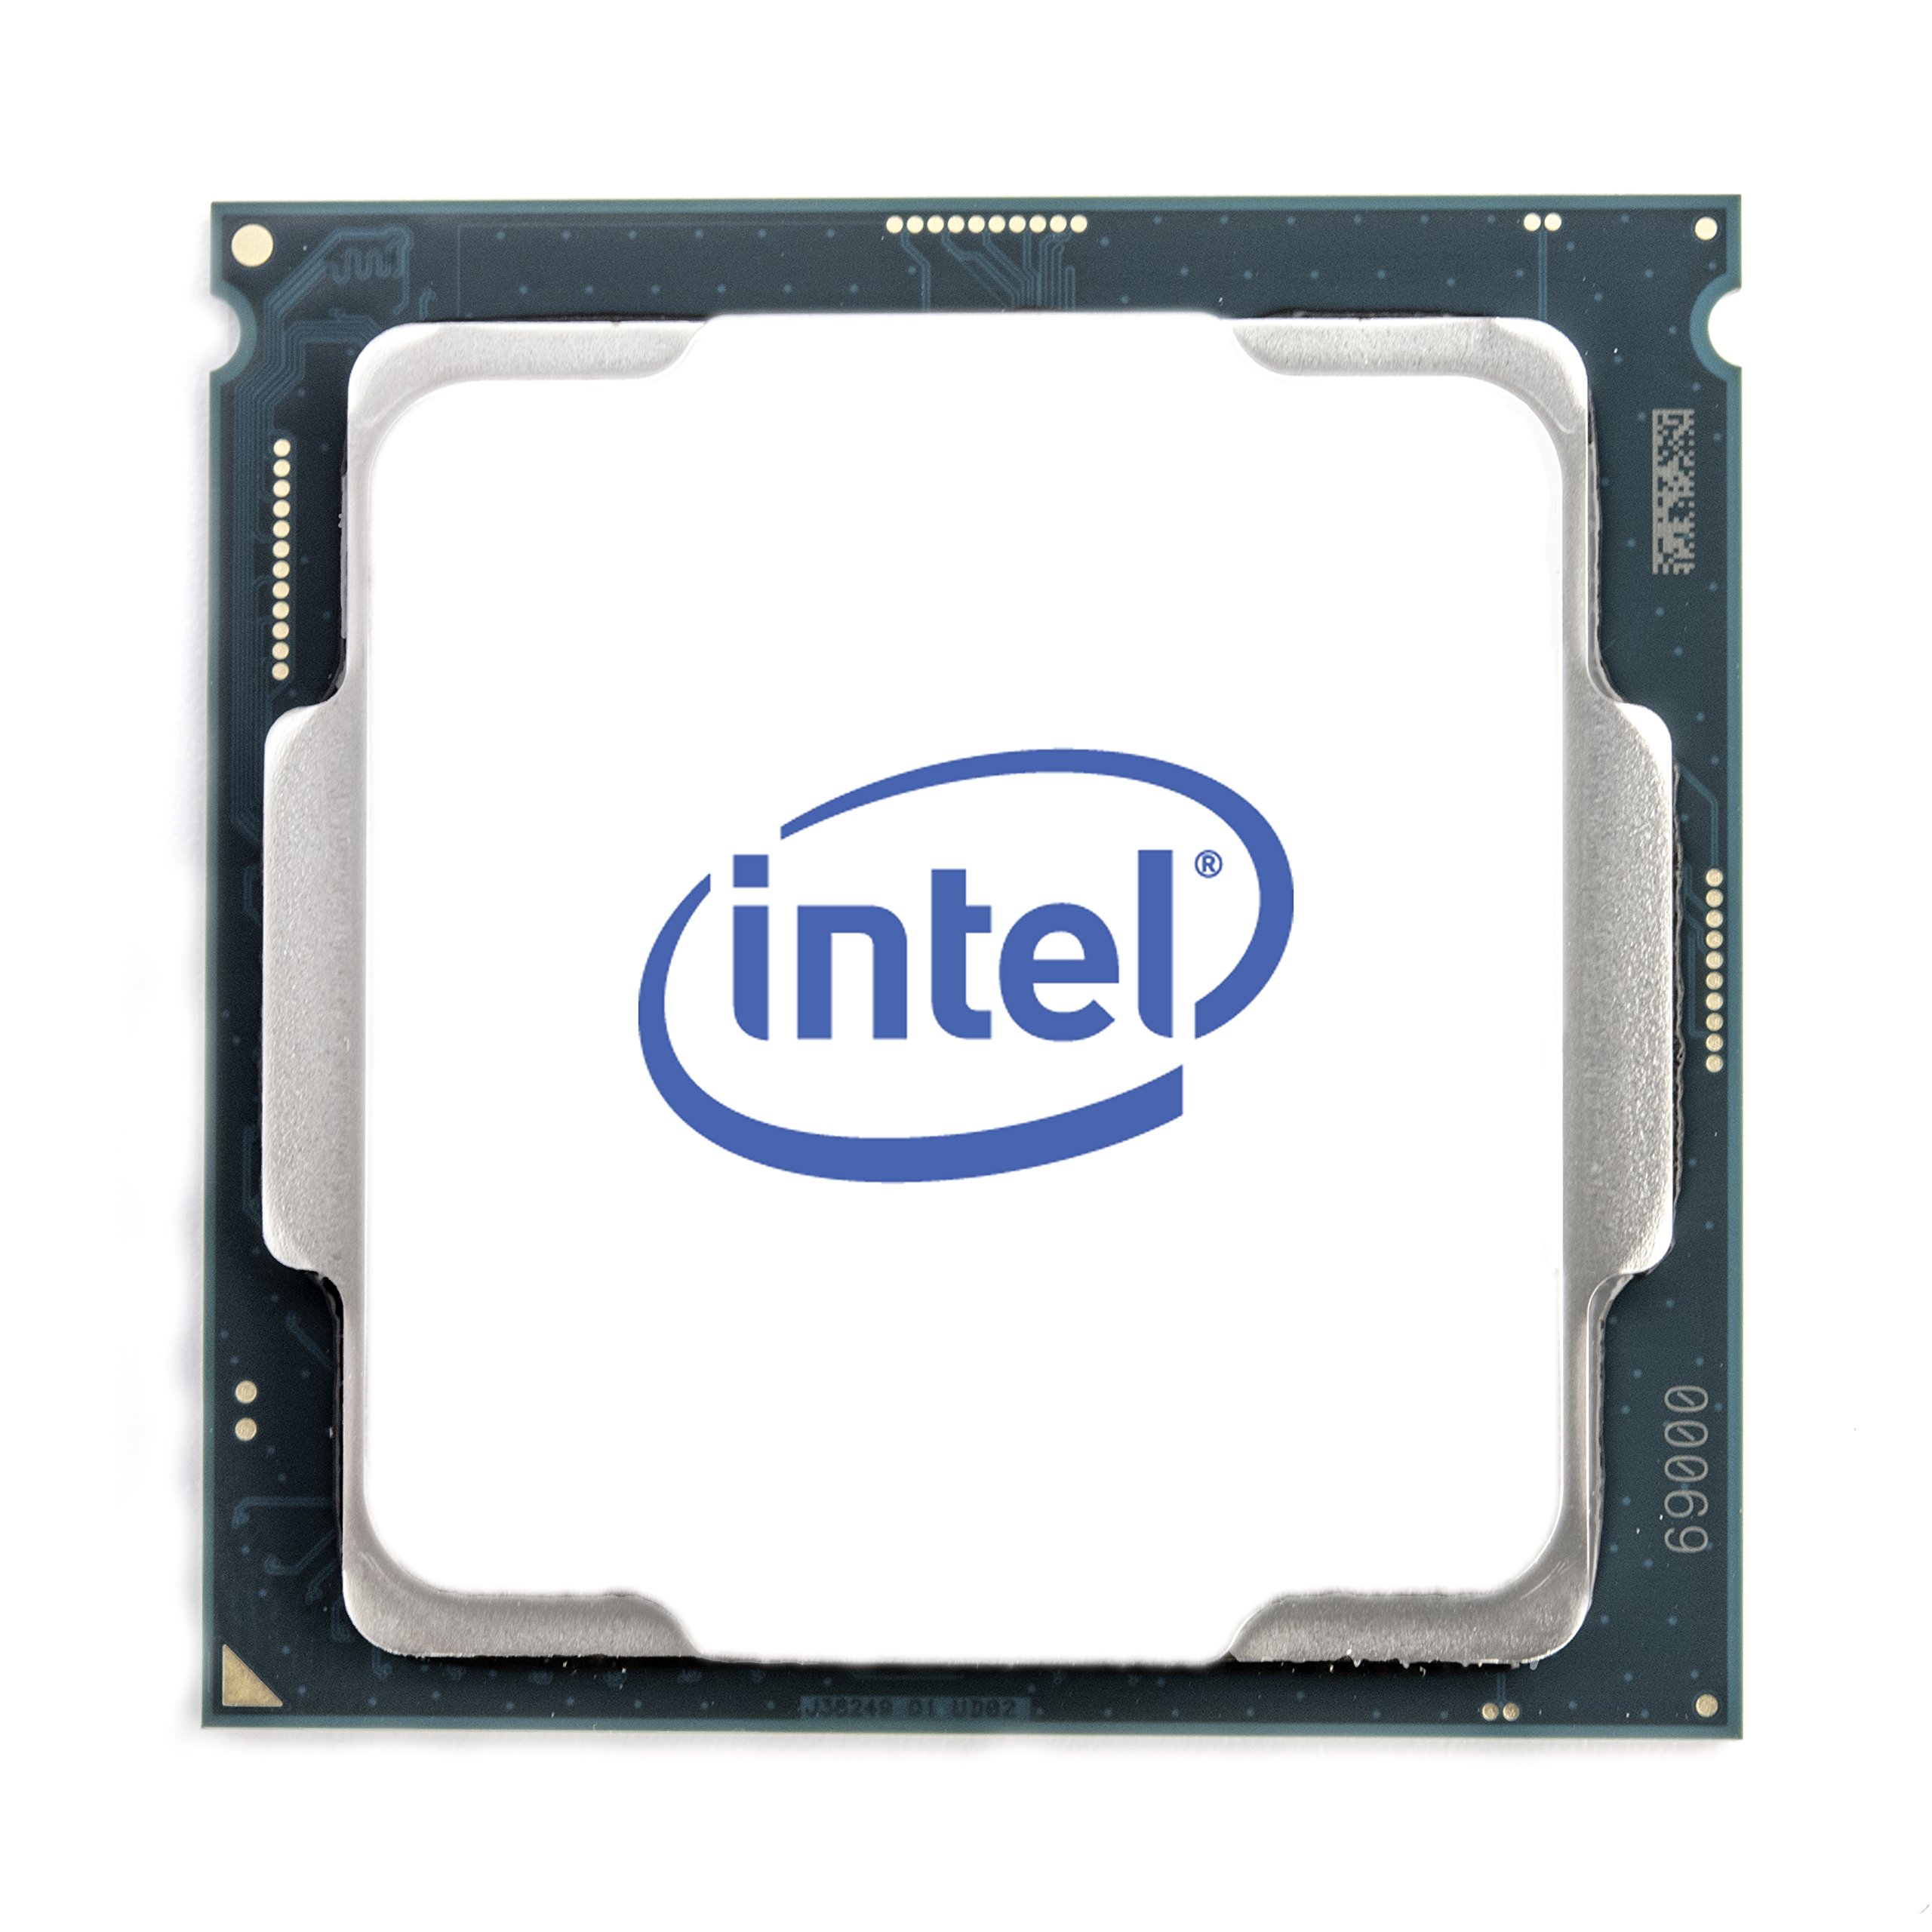 Intel Core i5-8600K Desktop Processor 6 Cores up to 4.3 GHz Unlocked LGA 1151 300 Series 95W